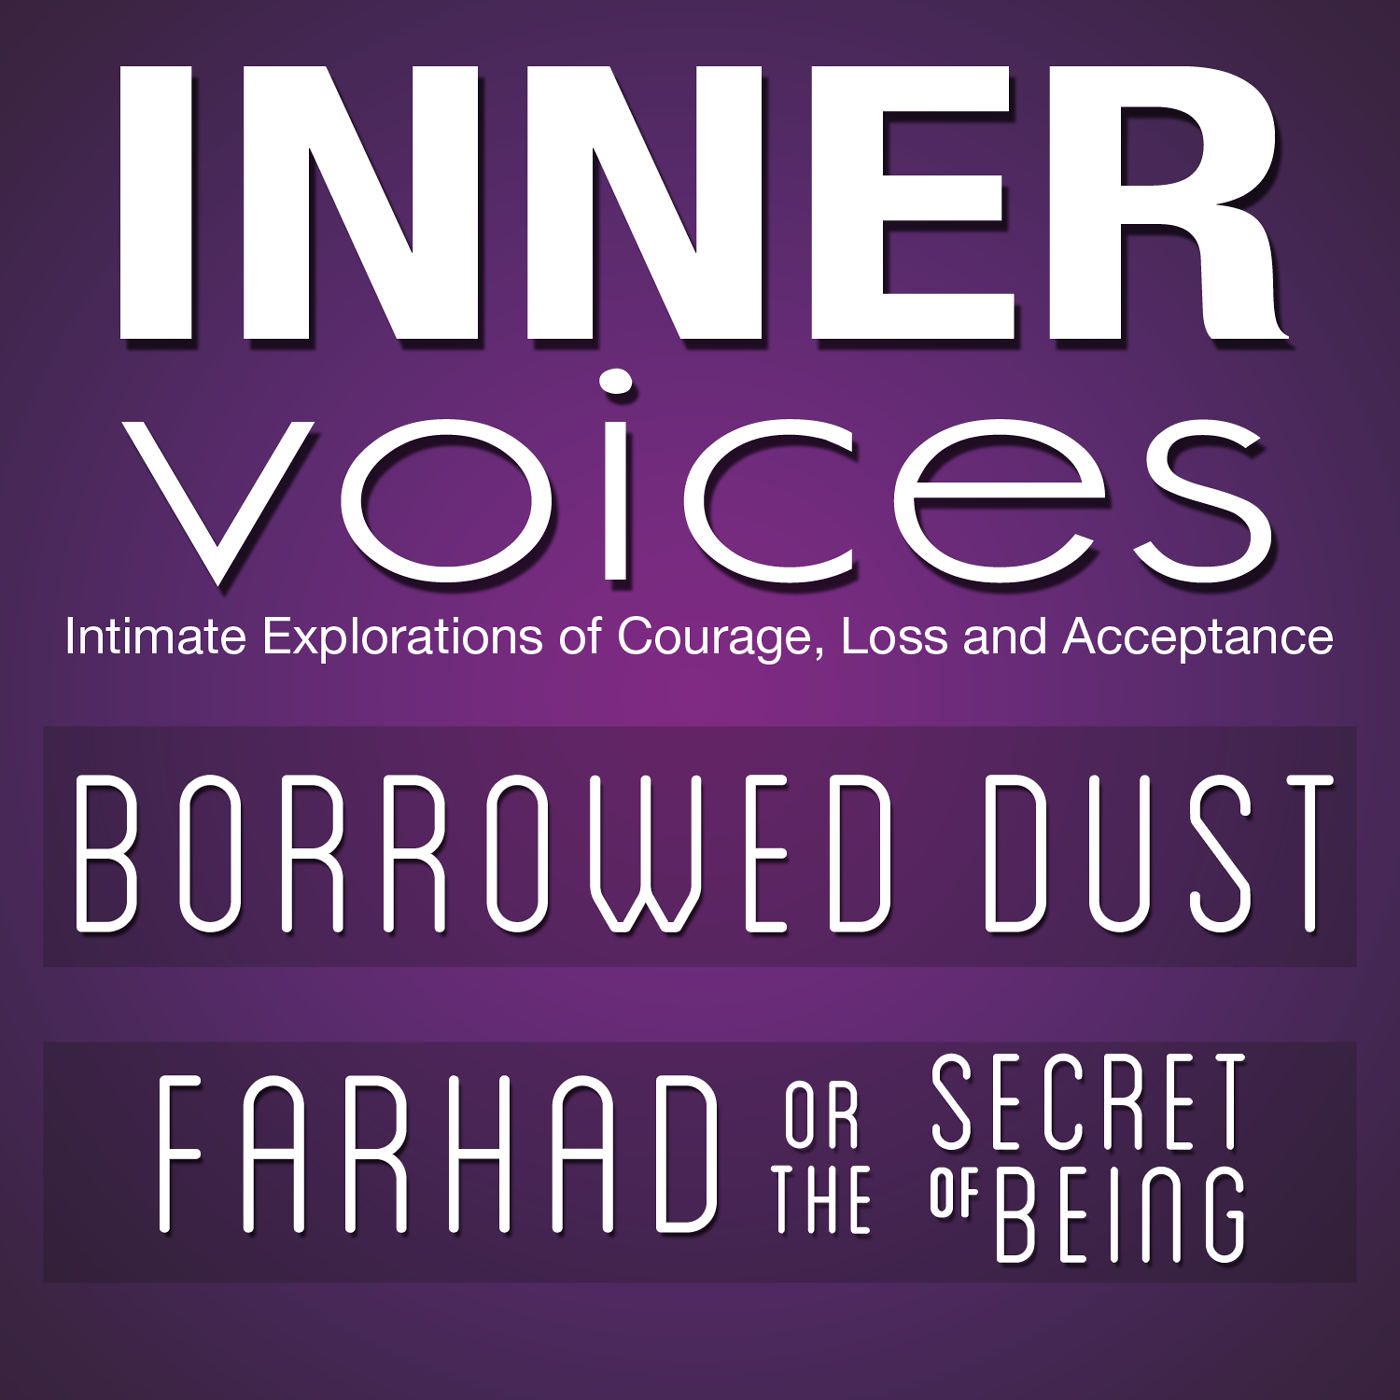 Farhad & Borrowed Dust CD Cover